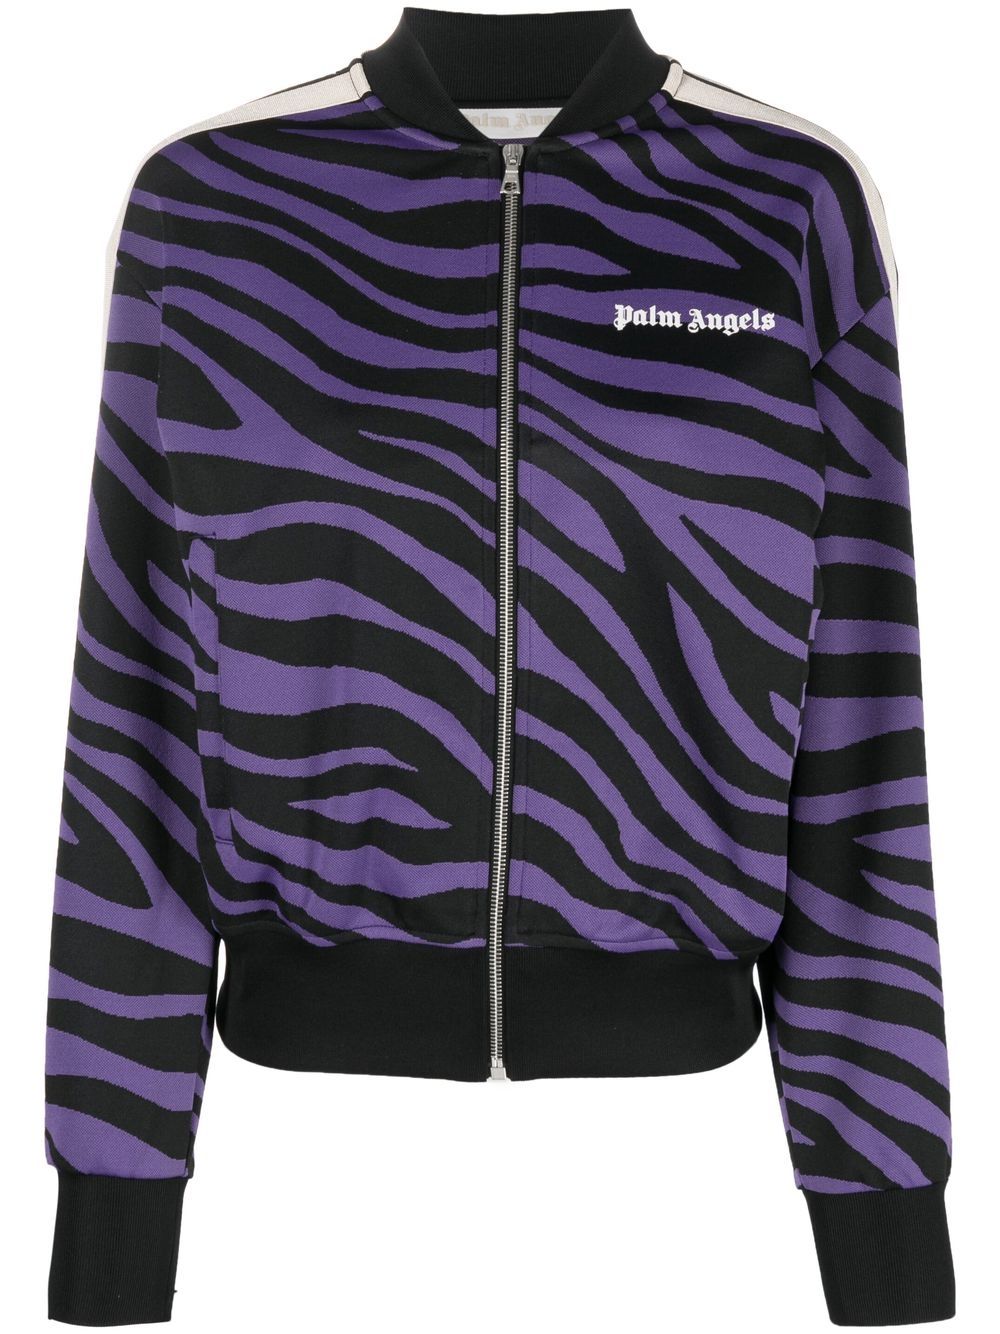 Palm Angels zebra-print track jacket - 3710 PURPLE BLACK